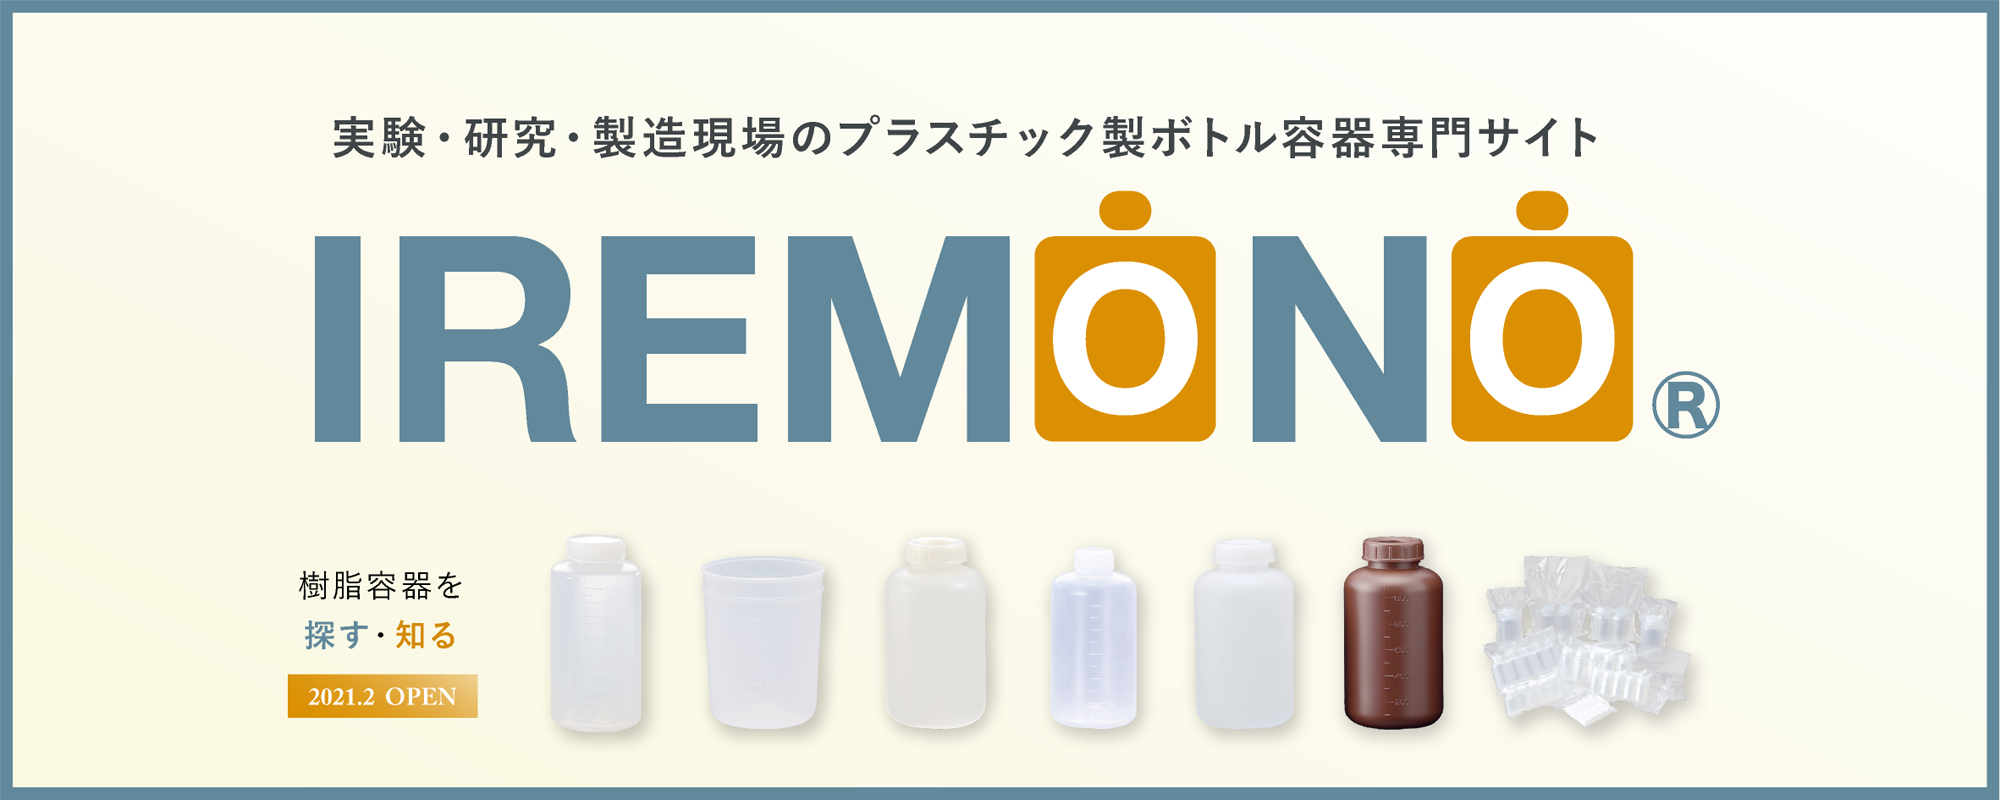 IREMONO-実験・研究・製造現場のプラスチック製ボトル容器専門サイト